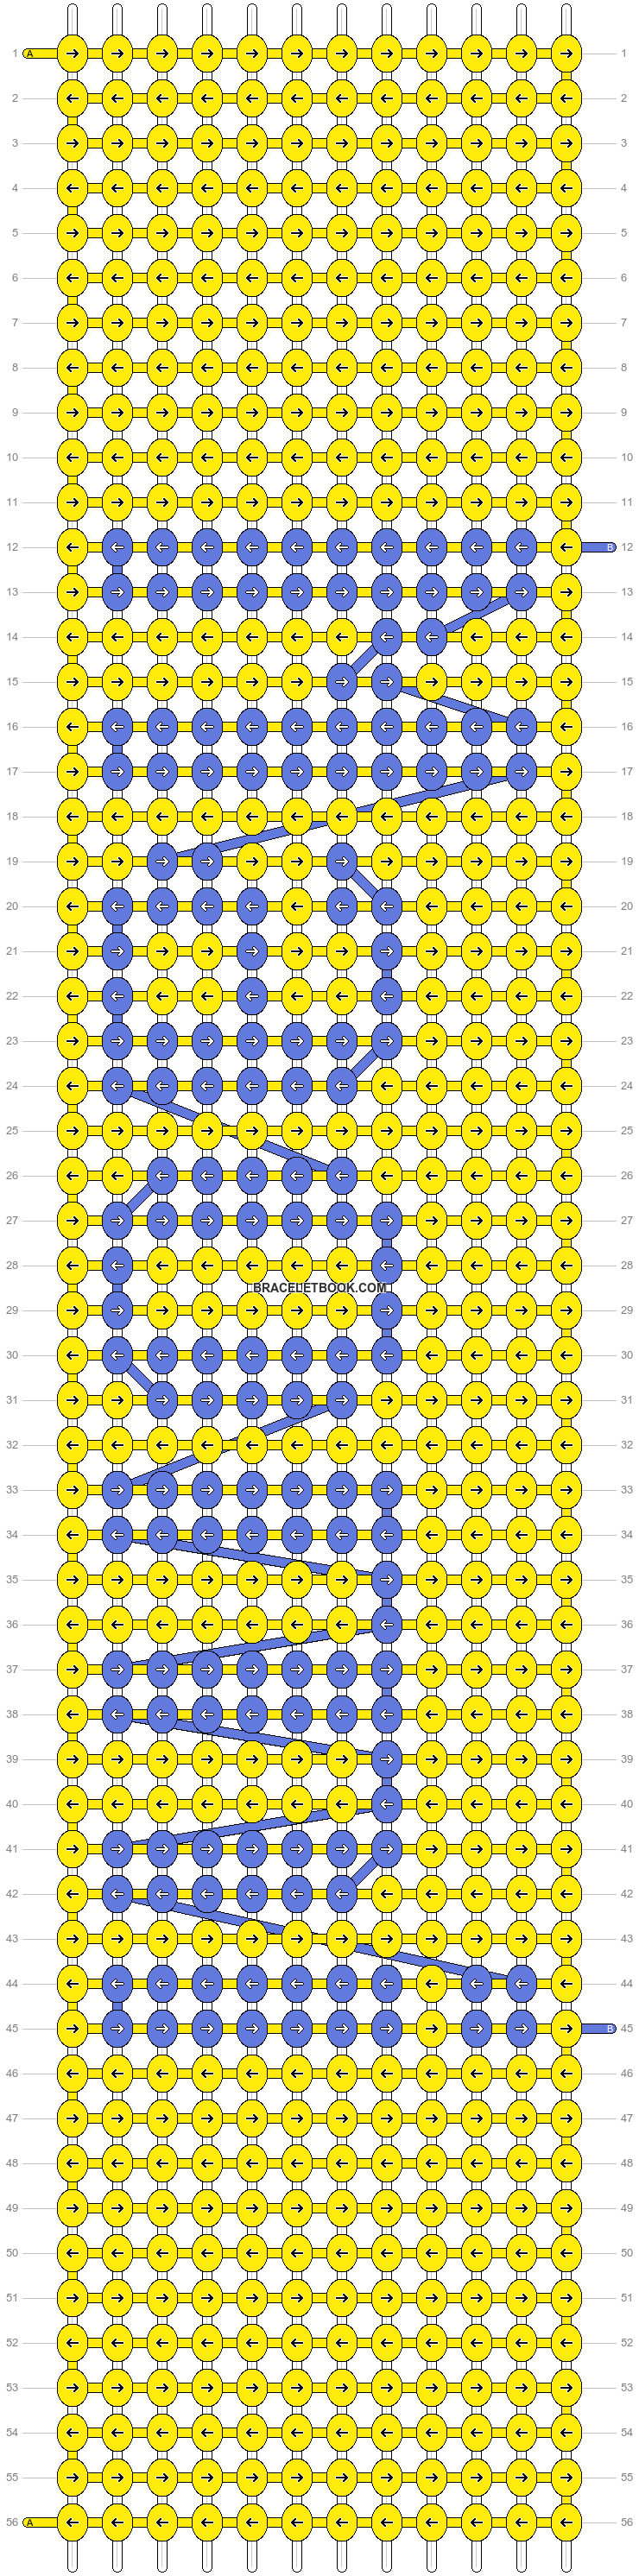 Alpha pattern #6564 variation #23767 pattern